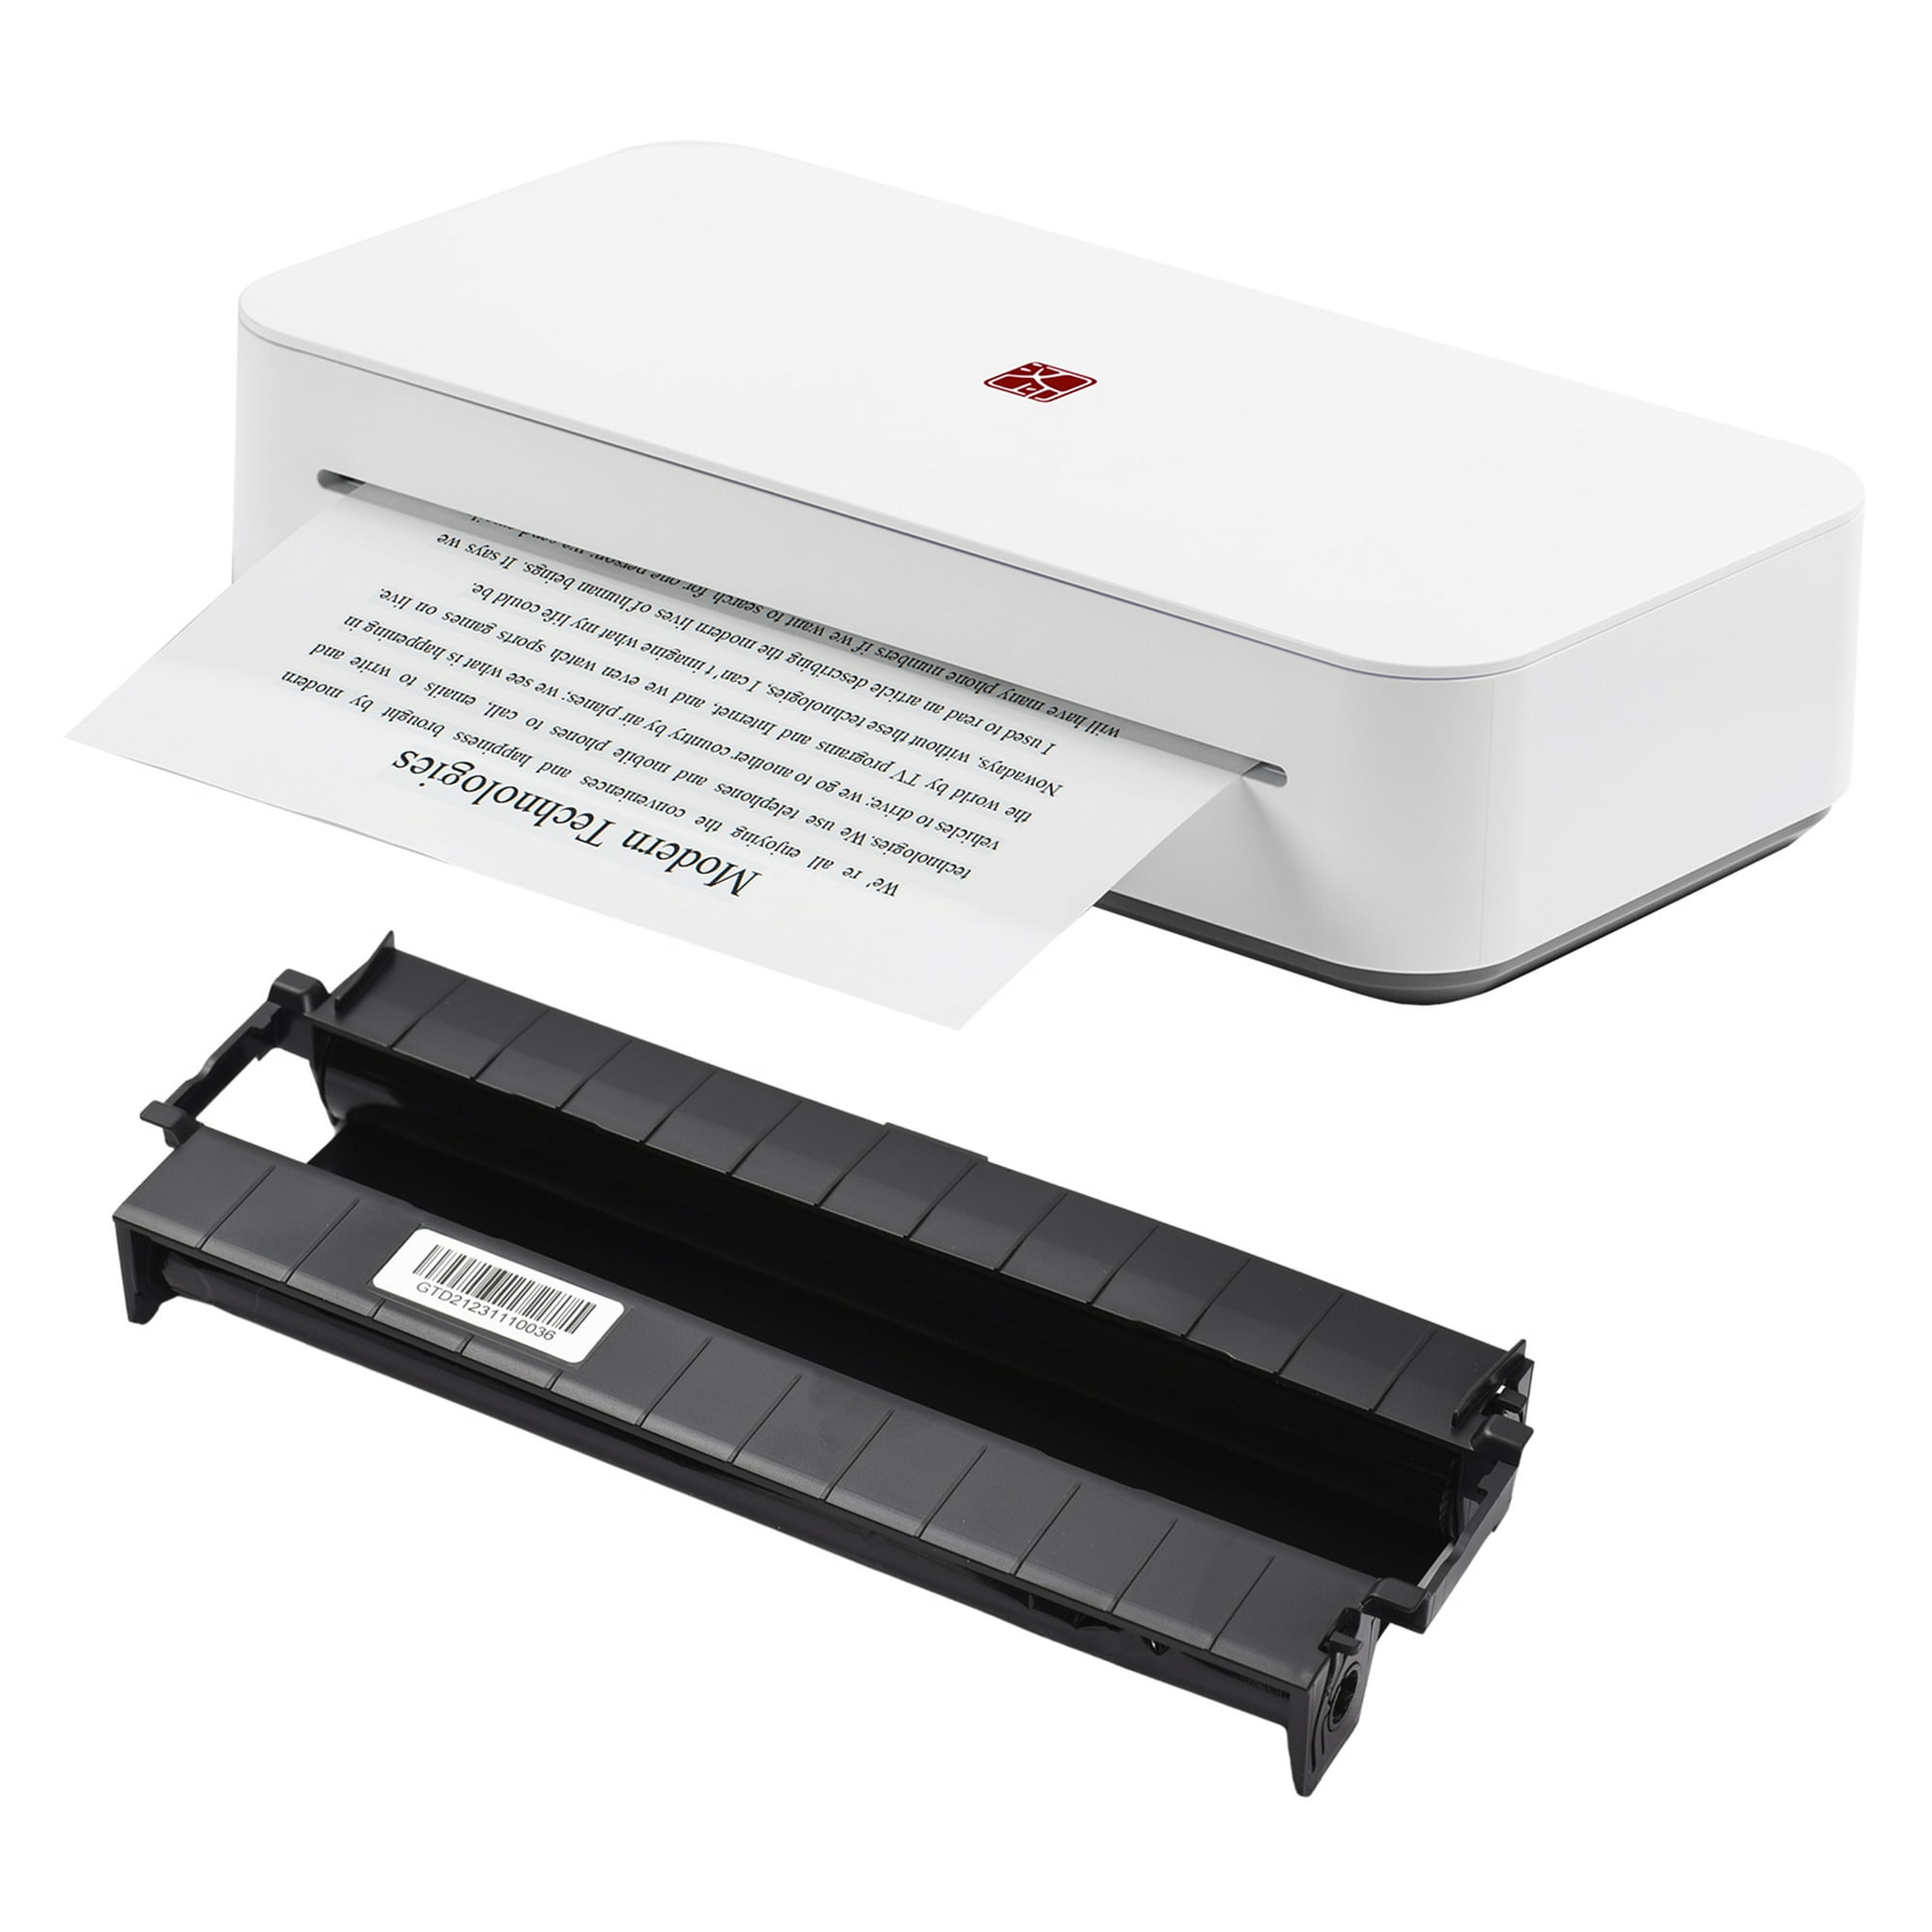 Impresora portátil inalámbrica por transferencia térmica HPRT